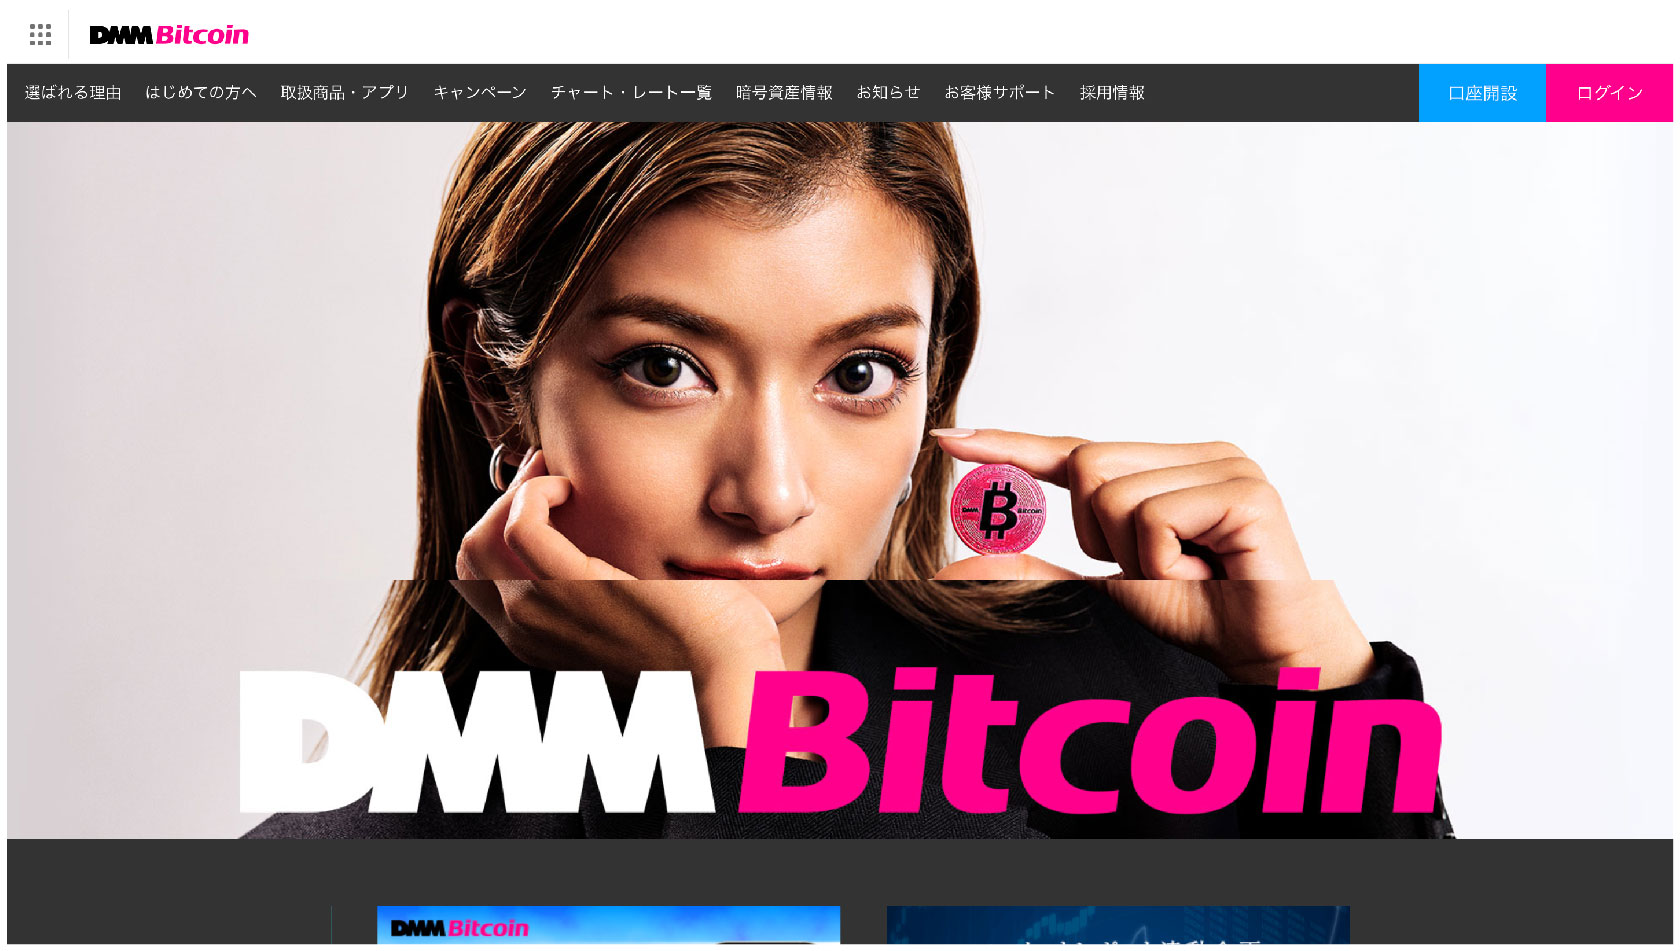 DMM ビットコインの評判や口コミ、取り扱い銘柄、手数料などについてのサイト画像